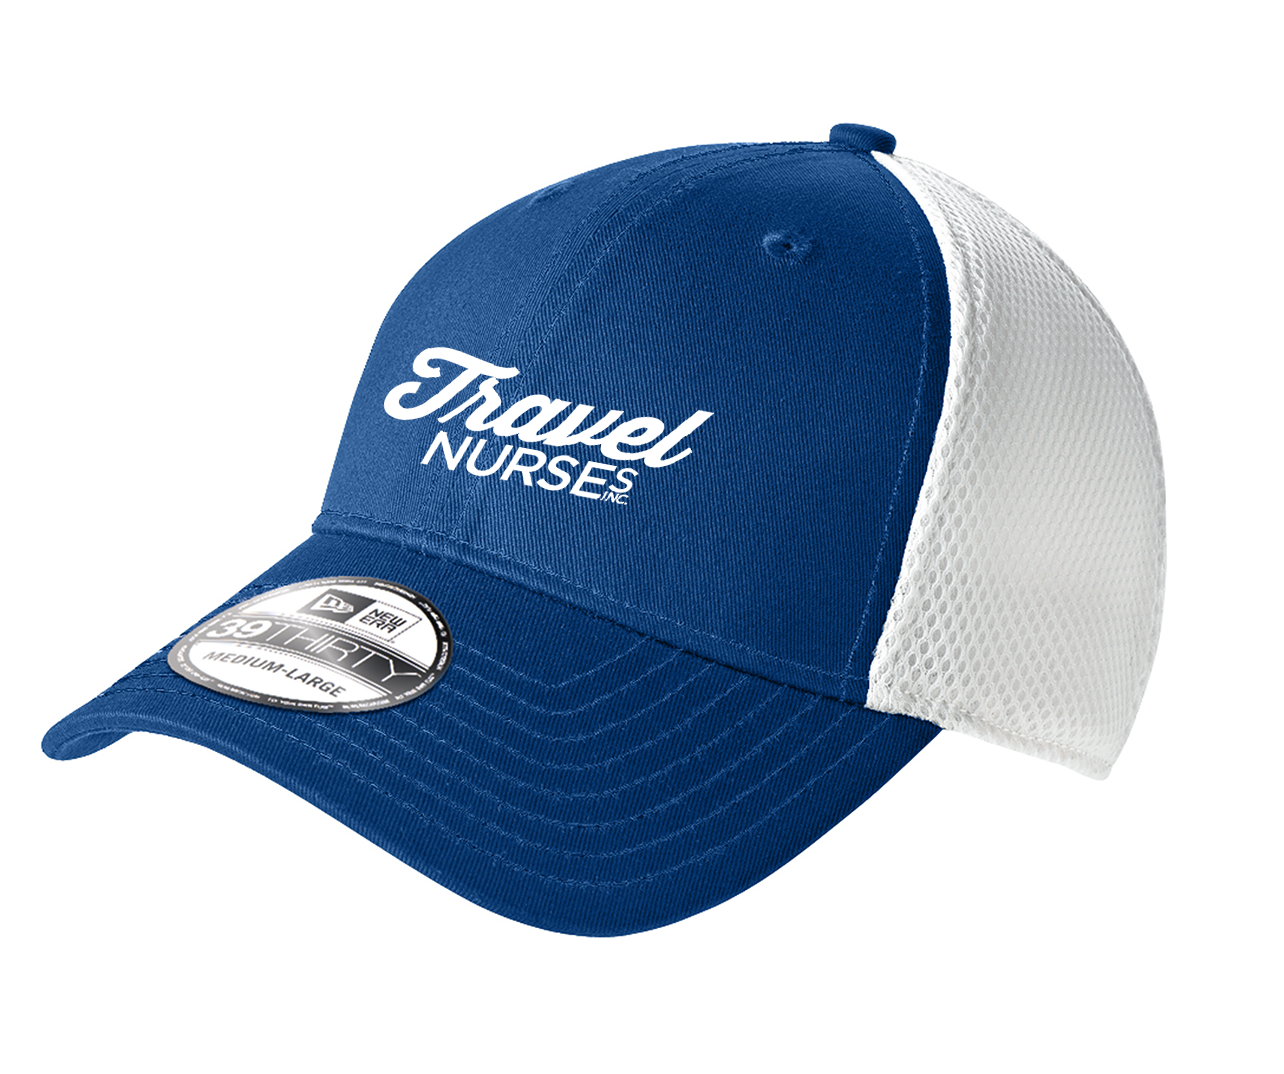 New Era® - Travel Nurses, Inc. Stretch Mesh Cap